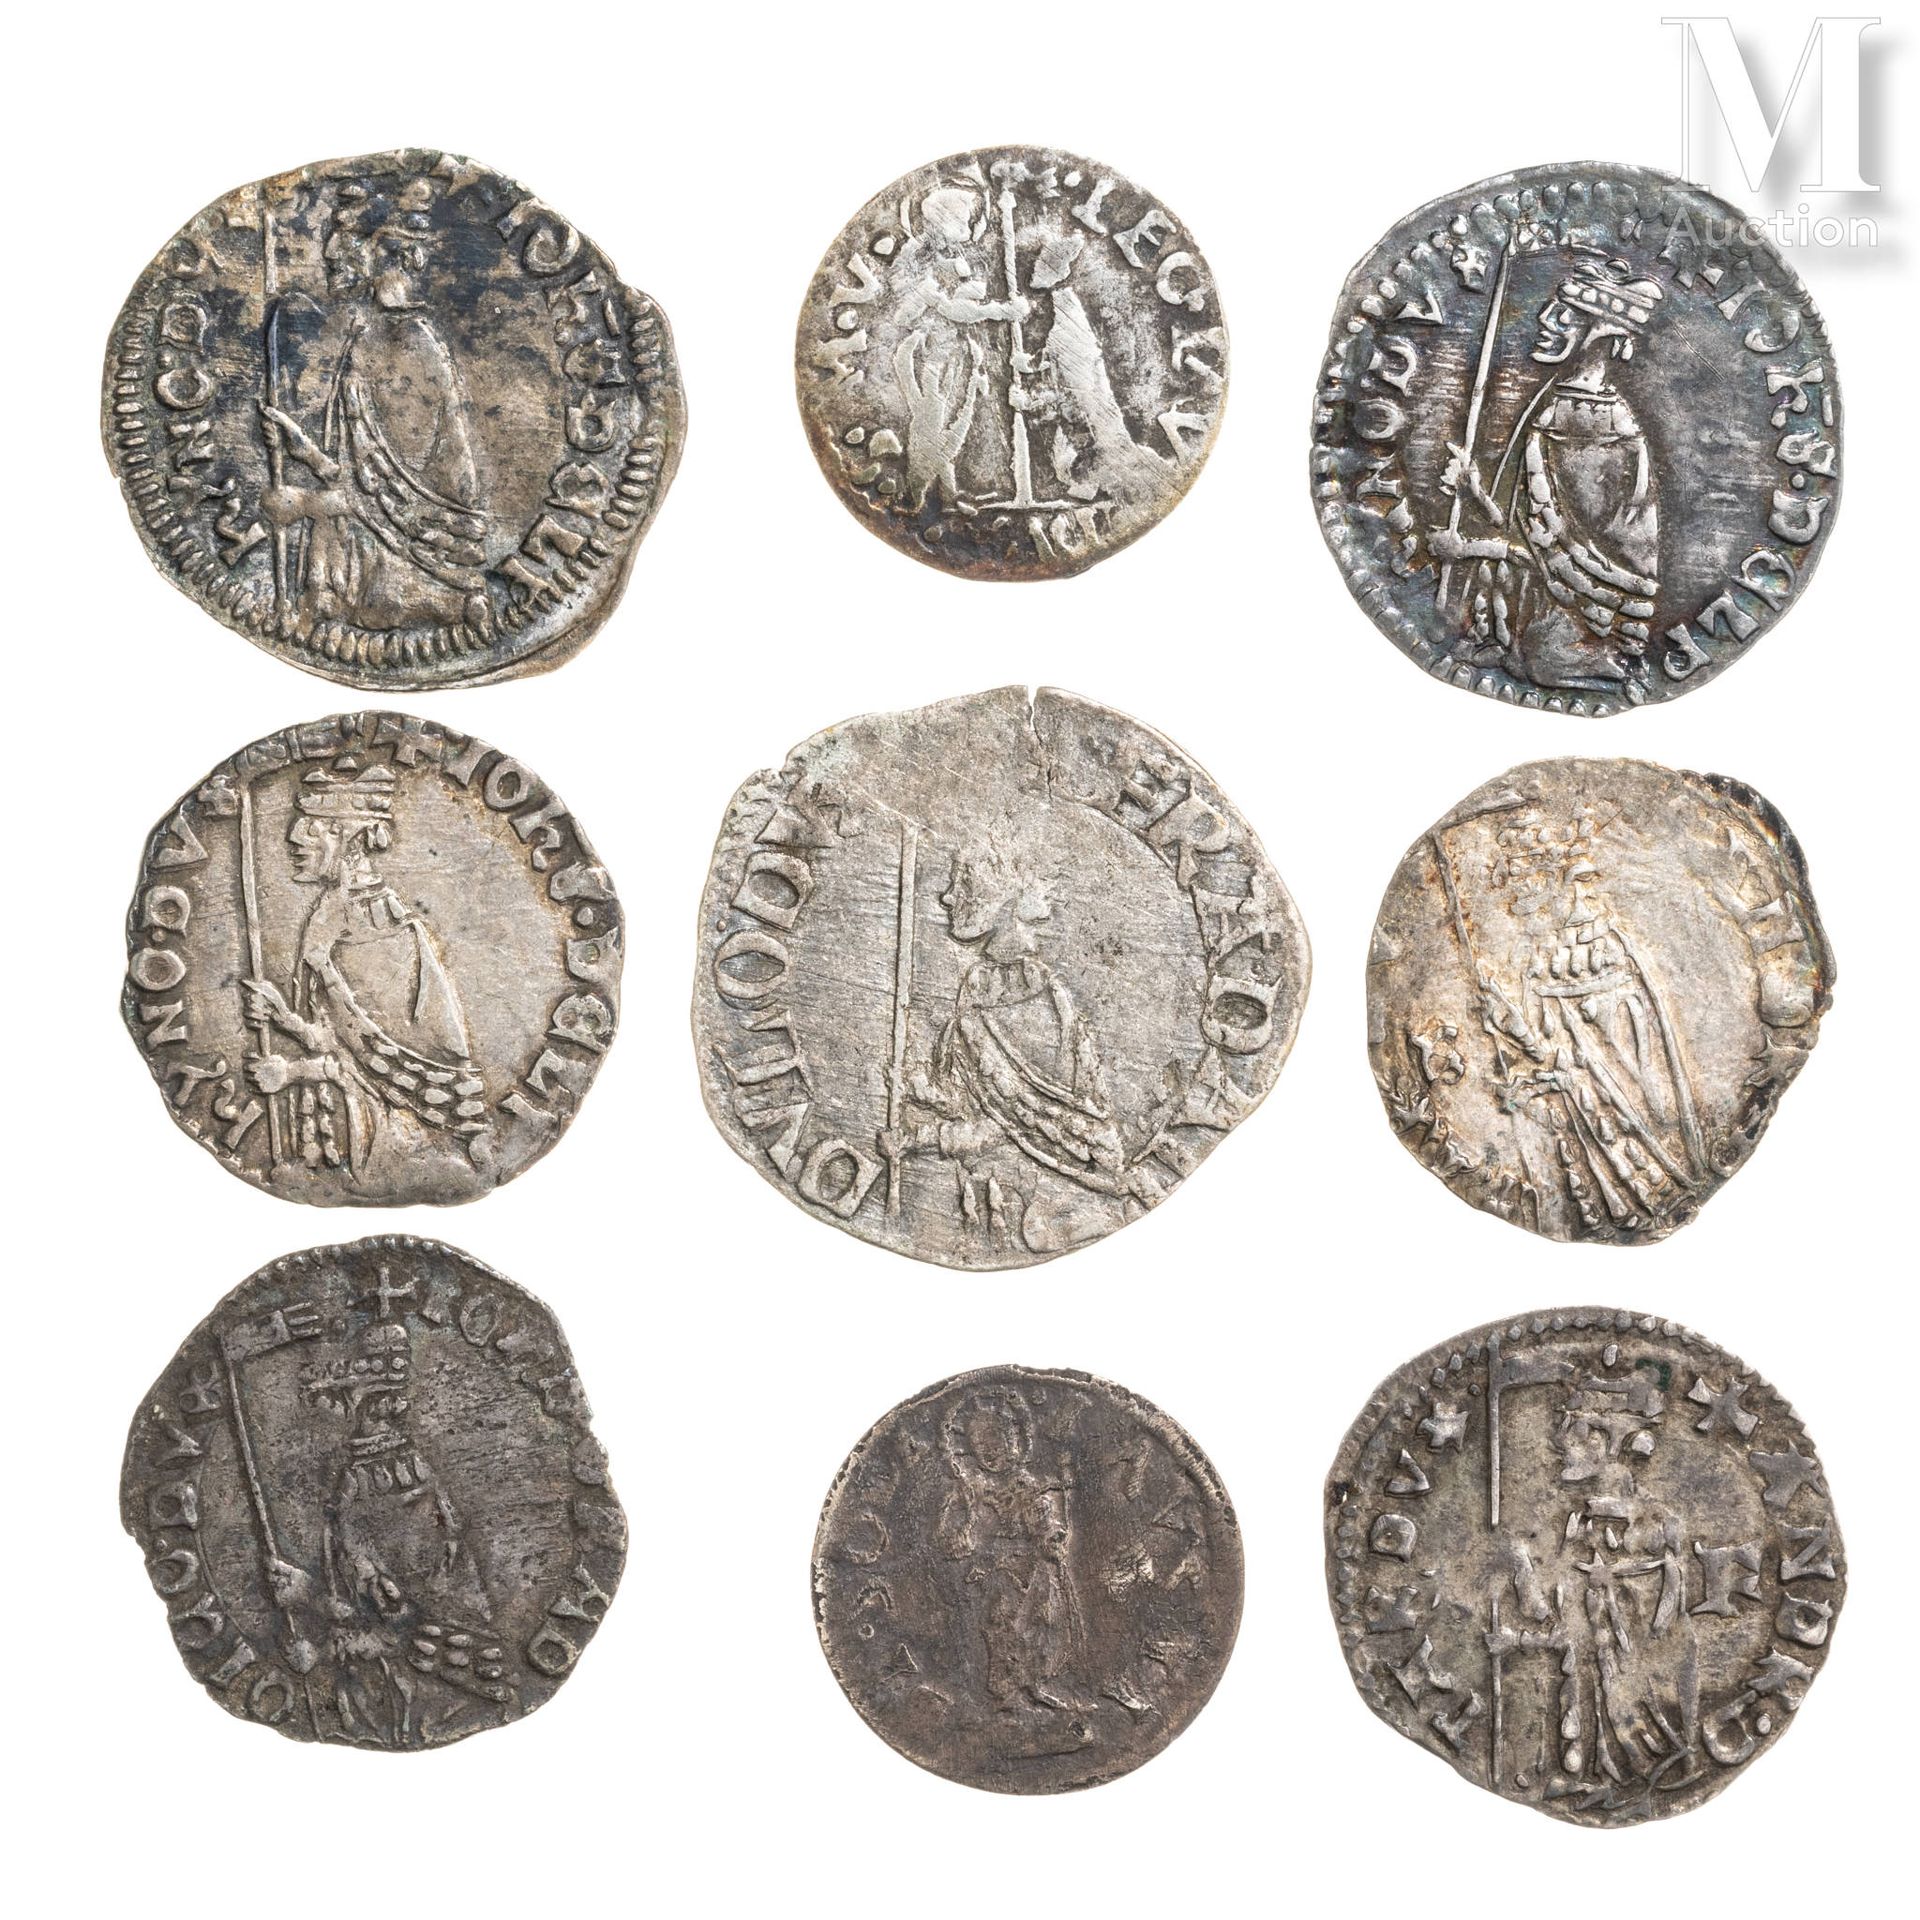 Venise - Lot of coins including:
-A soldino by Leonardo Loredan (1501-1521)
-A s&hellip;